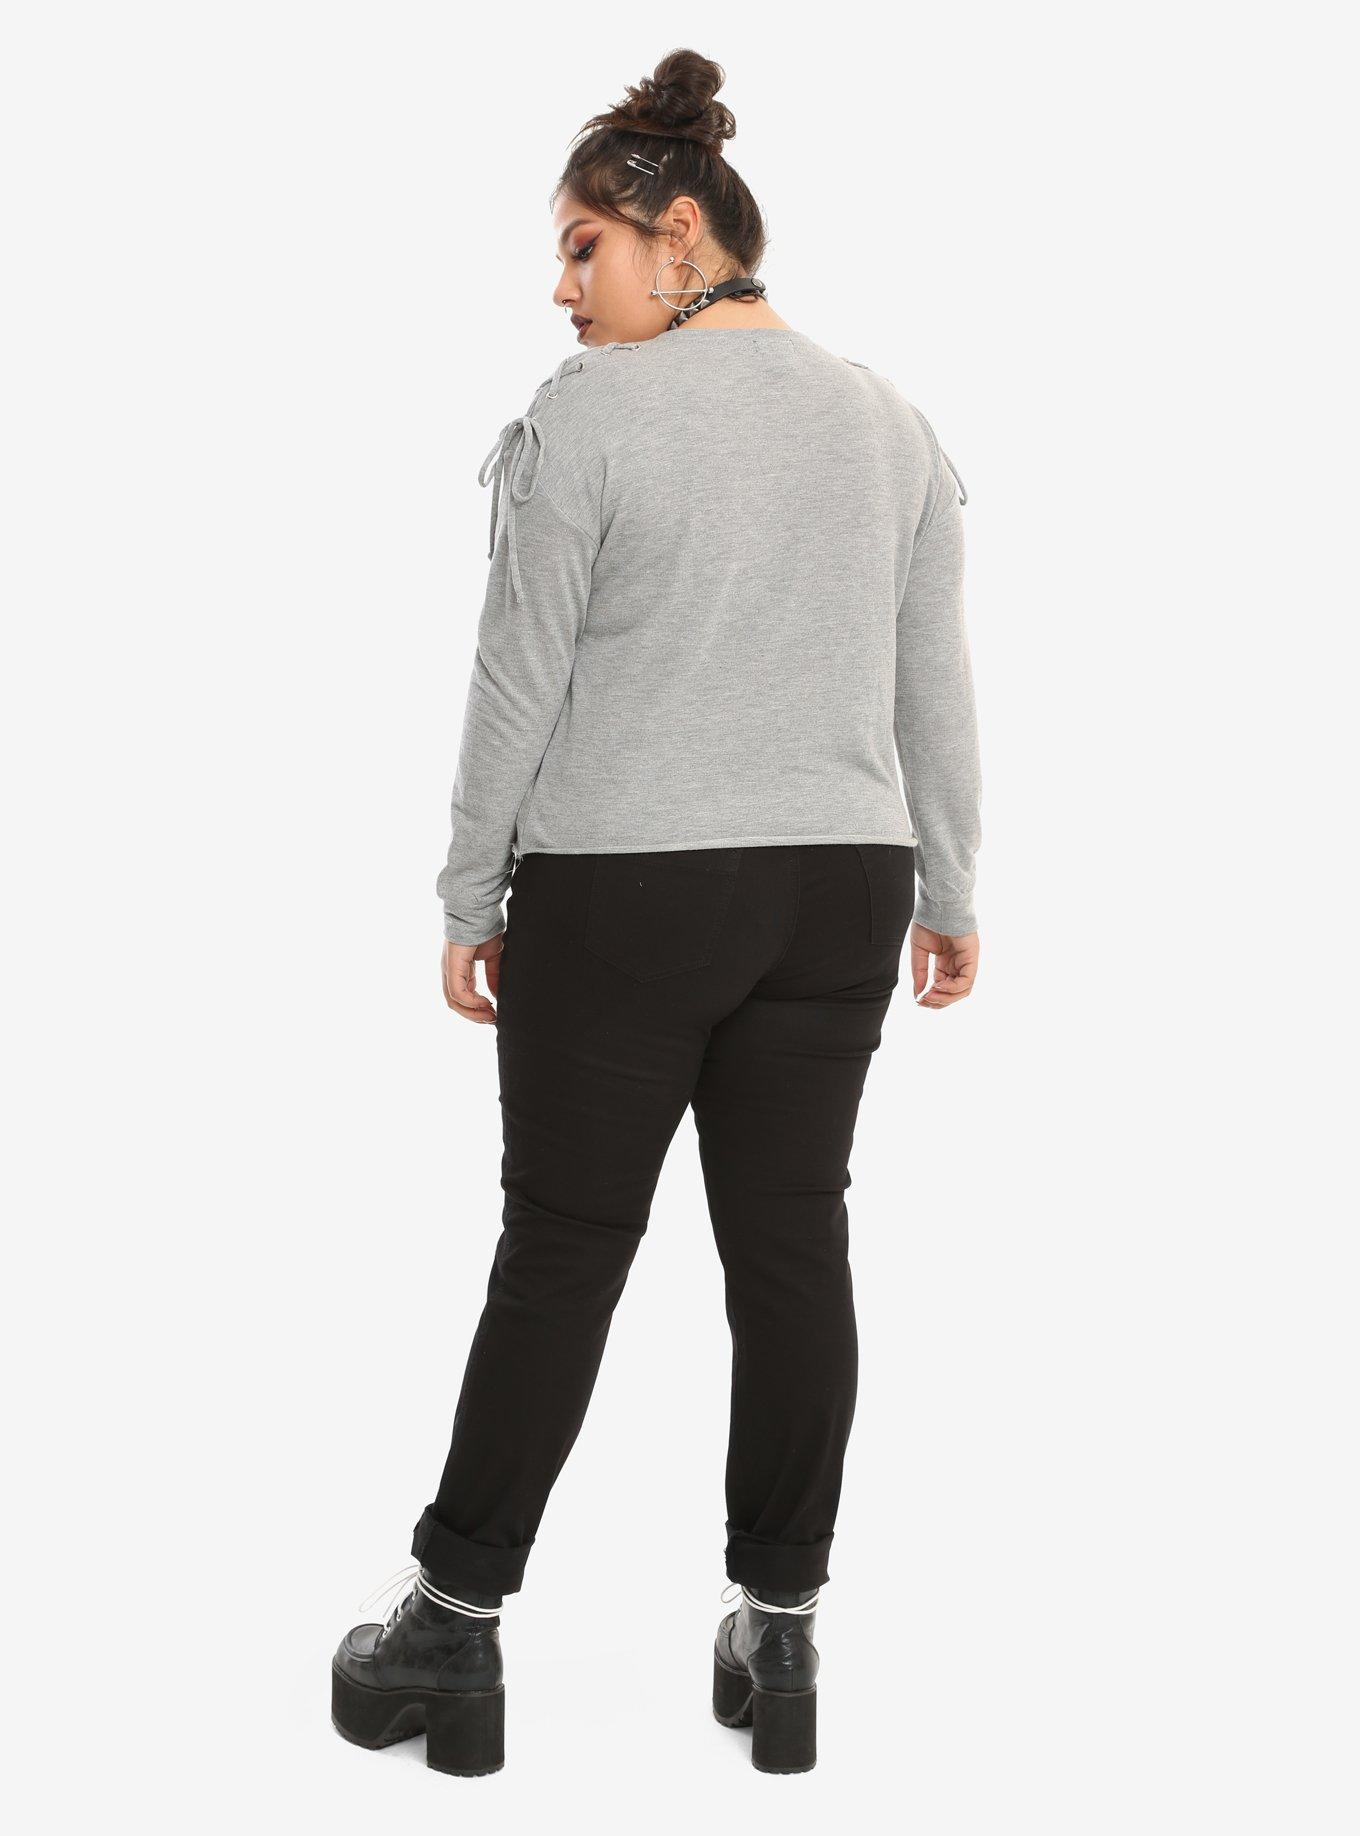 Heather Grey Tie Shoulder Girls Crop Sweatshirt Plus Size, GREY, alternate